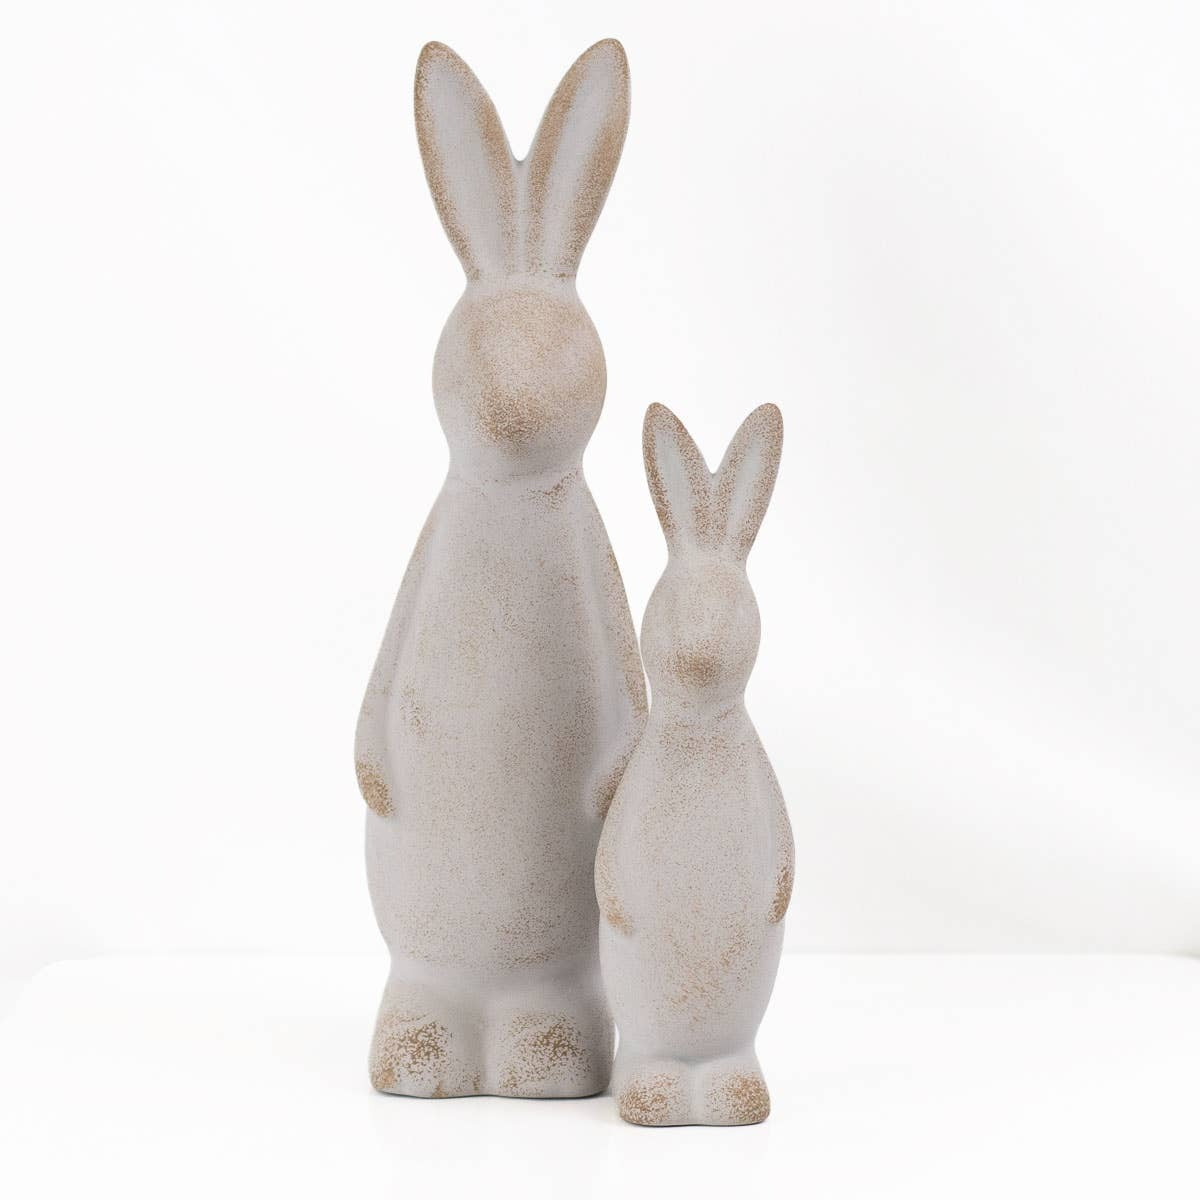 Figurine Bunny Antique Gray 7"